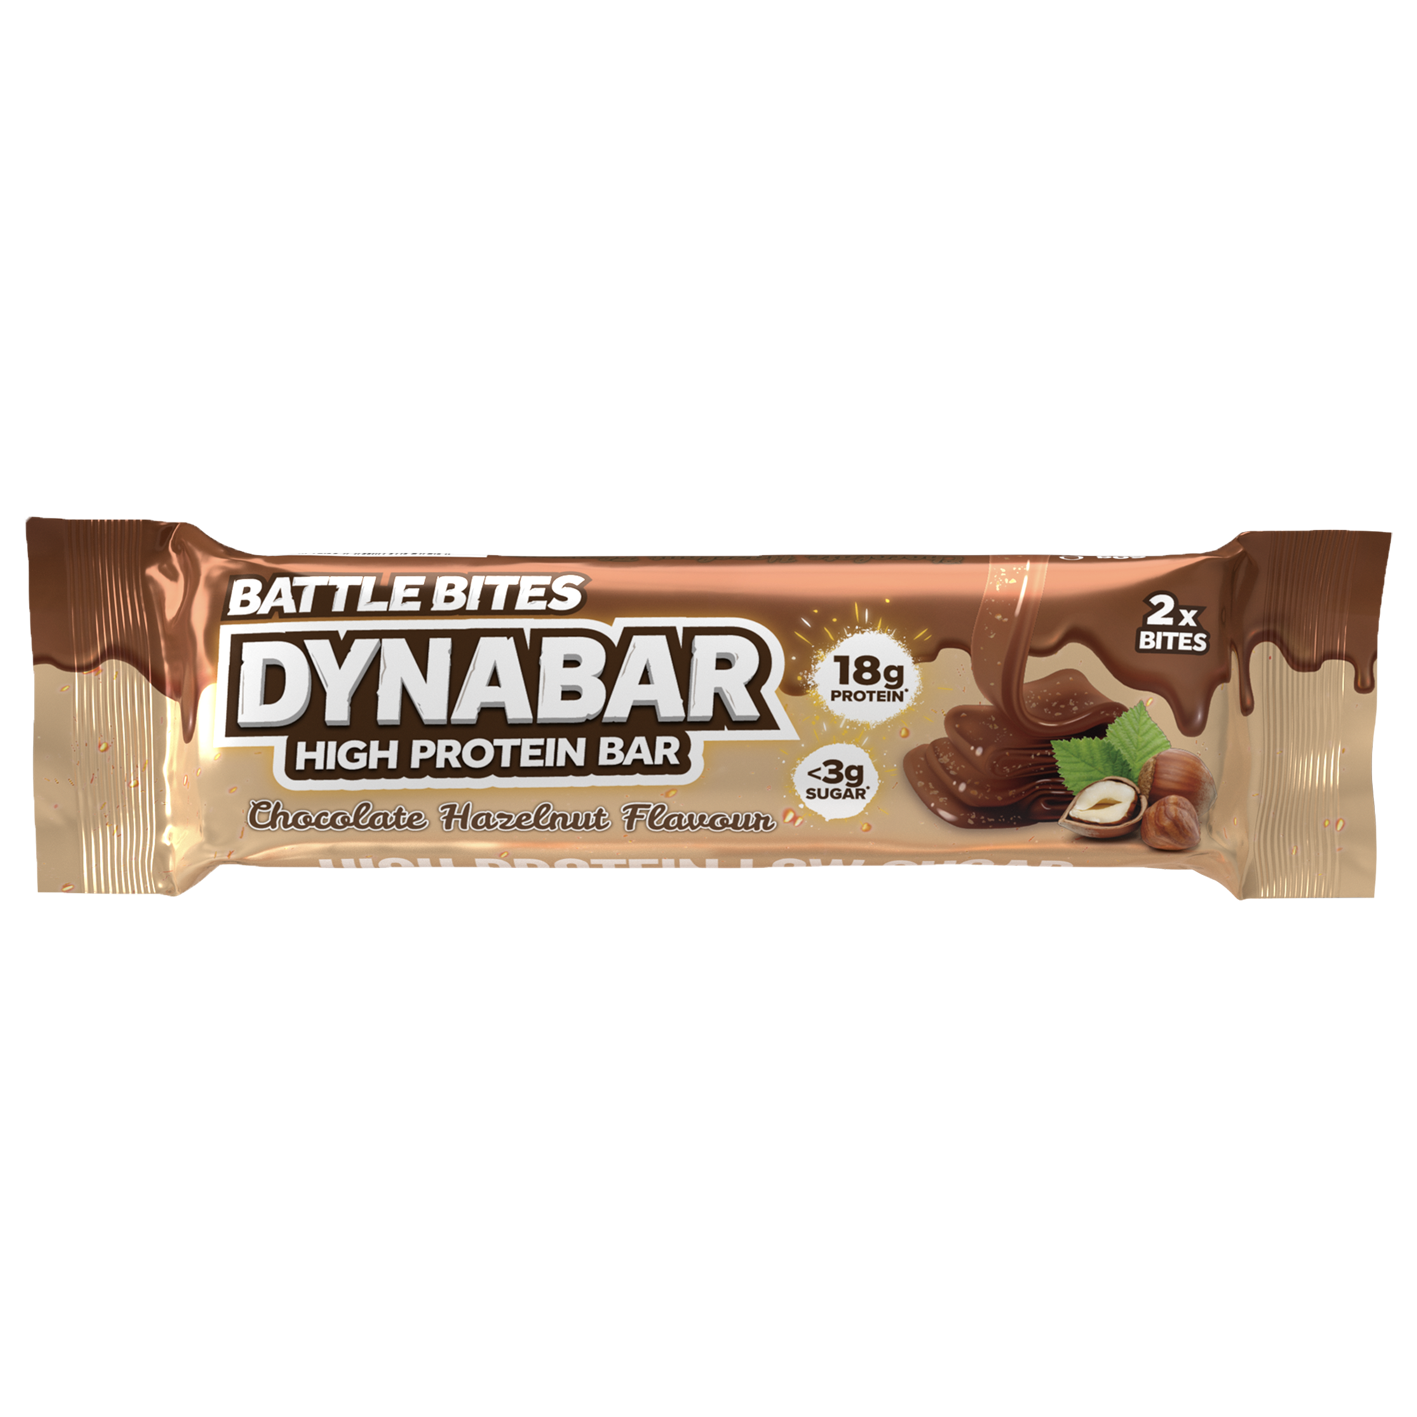 Battle Bites DynaBar Chocolate Hazelnut 60g - Price per box of 12